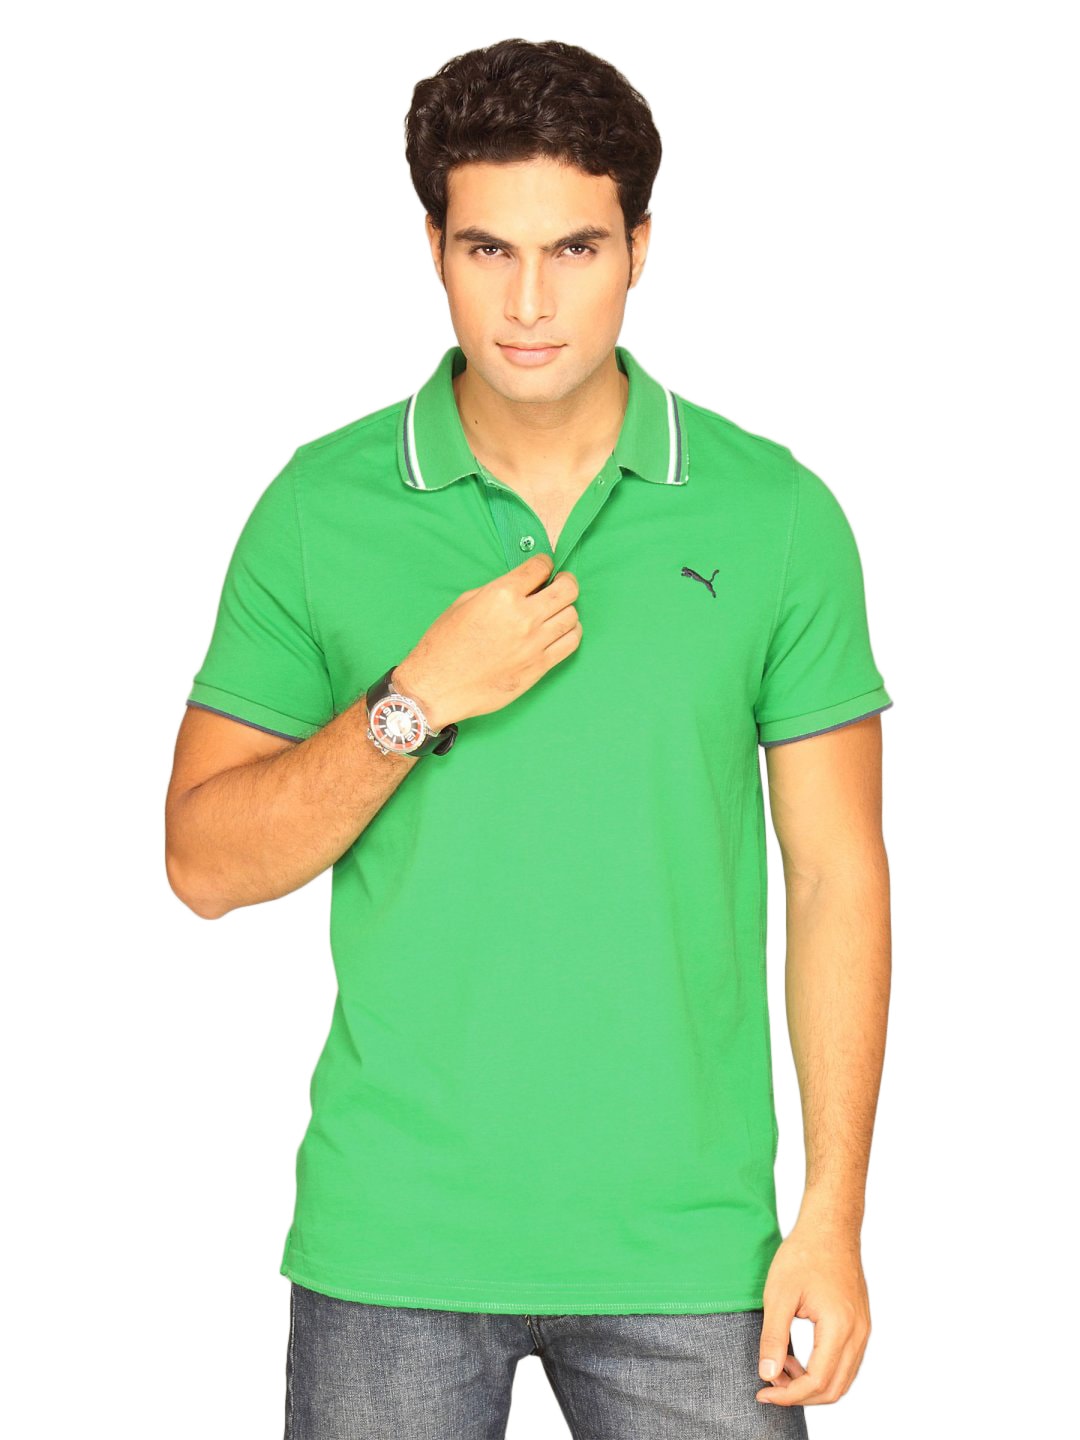 Puma Men's Polo Green T-shirt